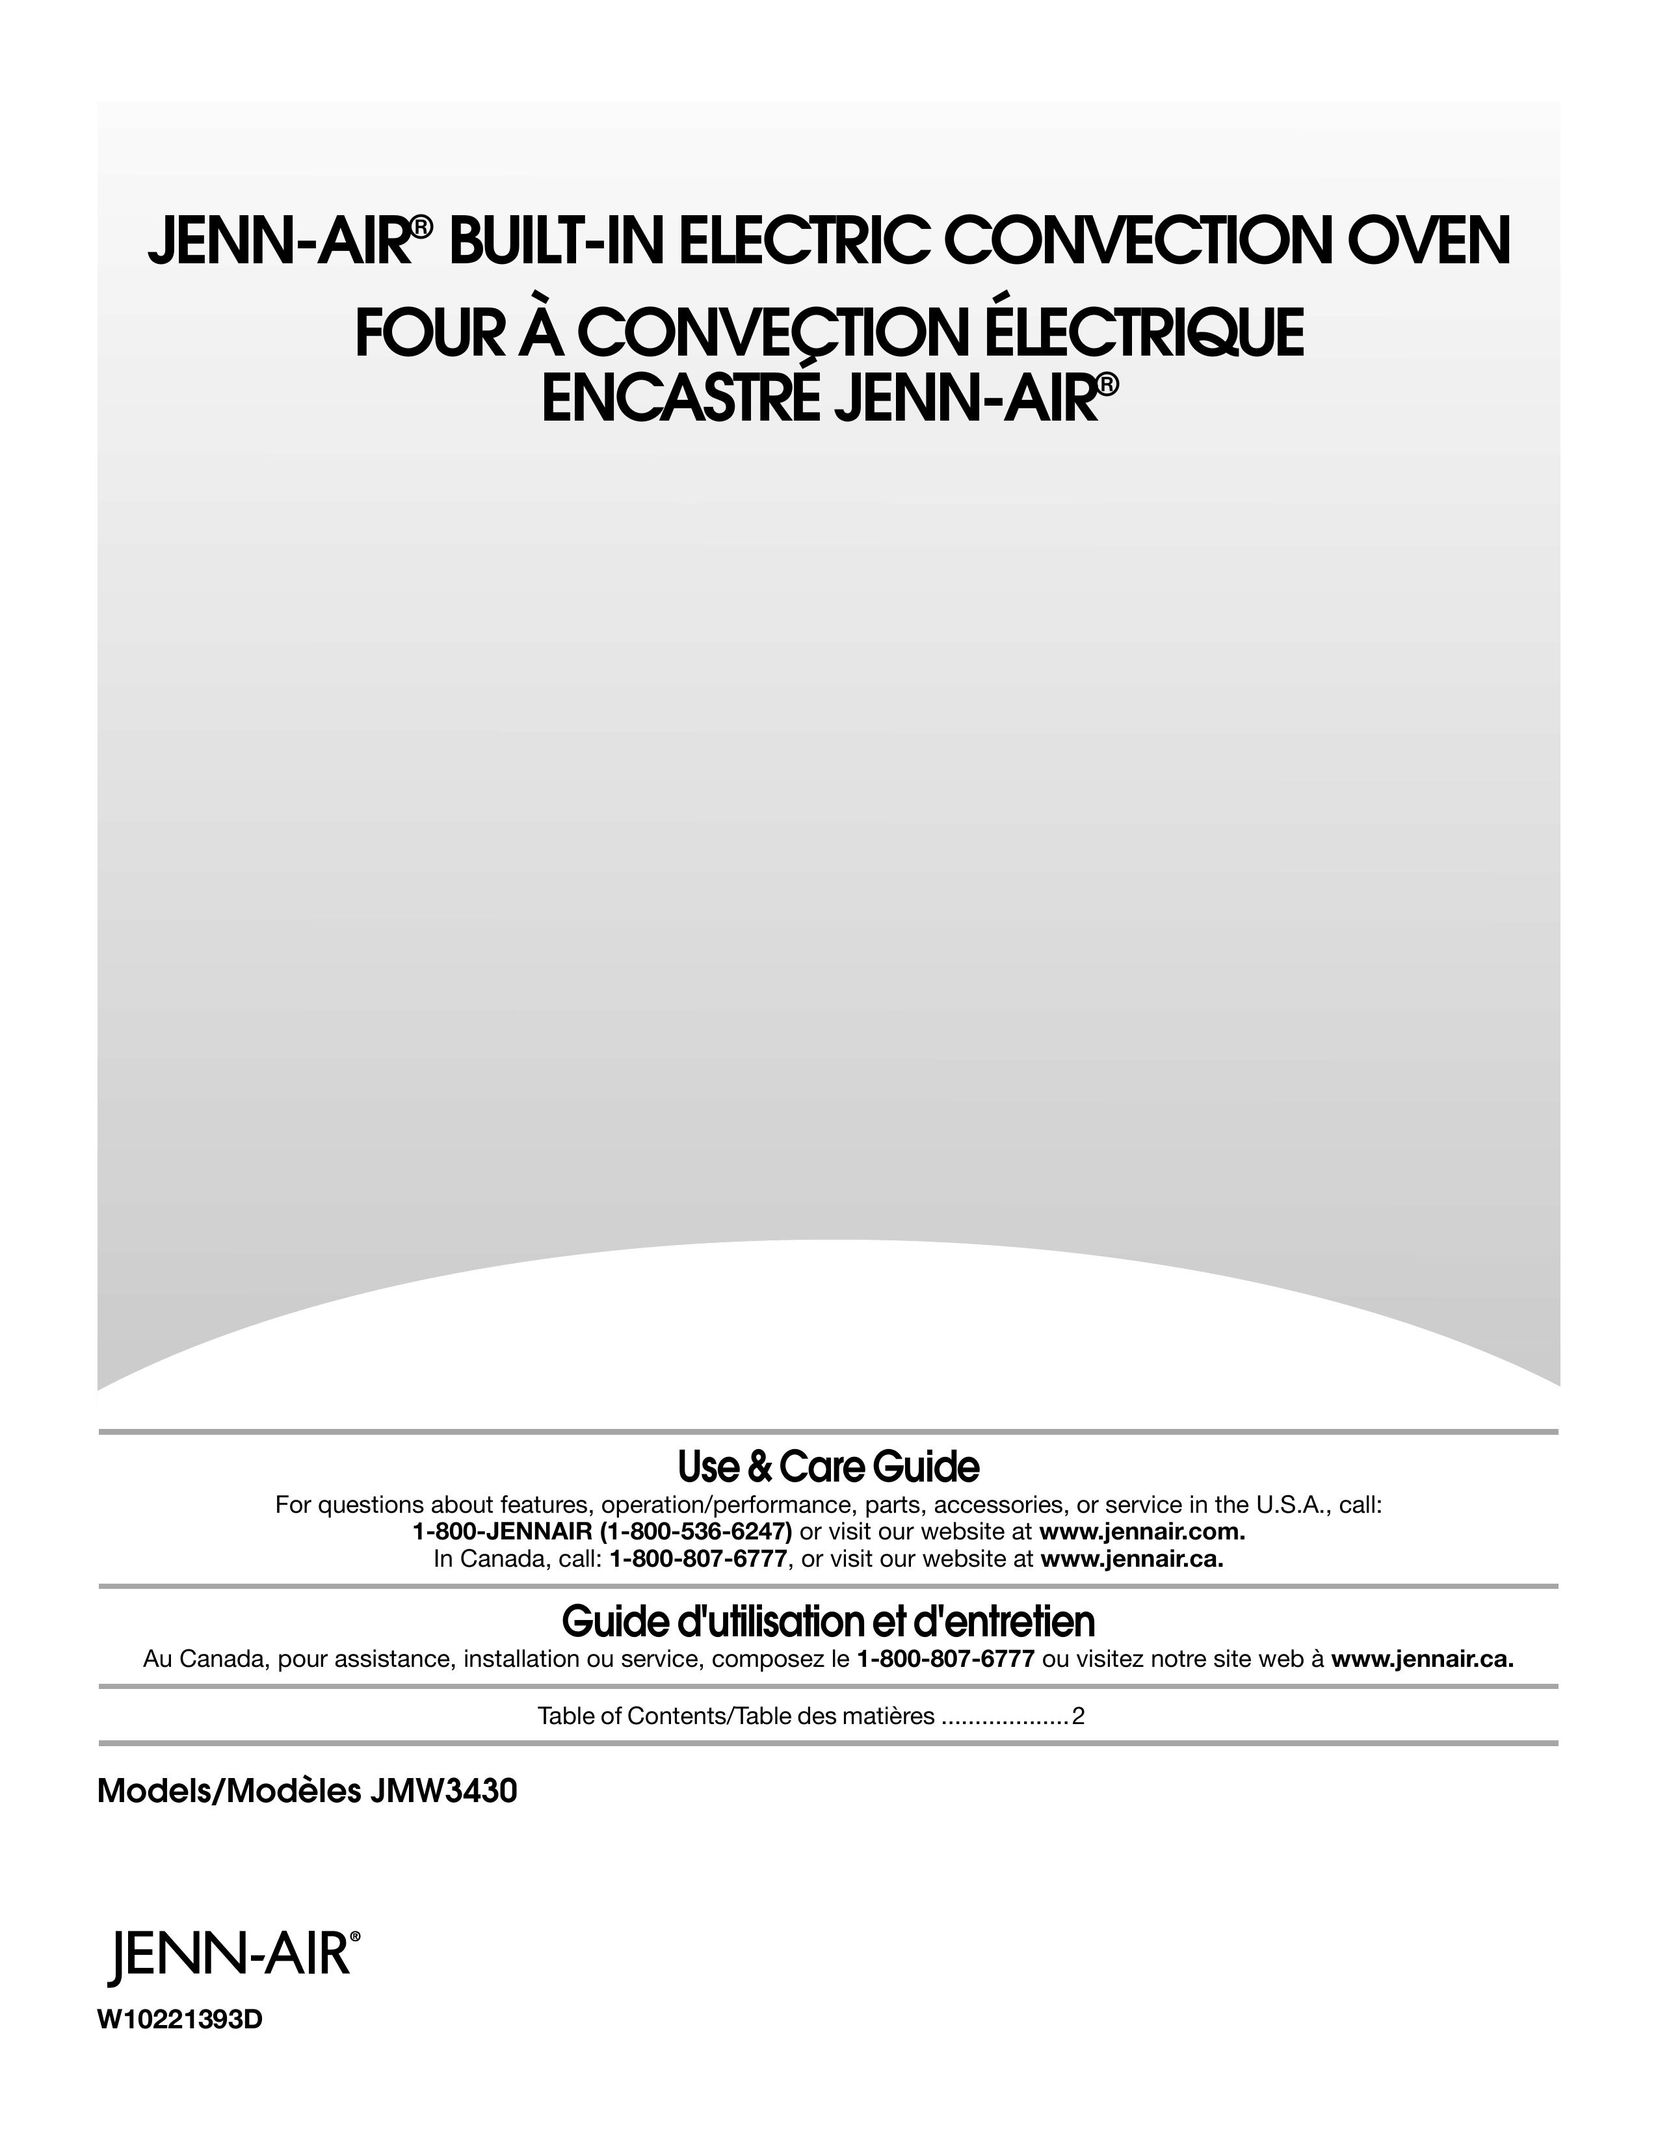 Jenn-Air JMW3430 Convection Oven User Manual